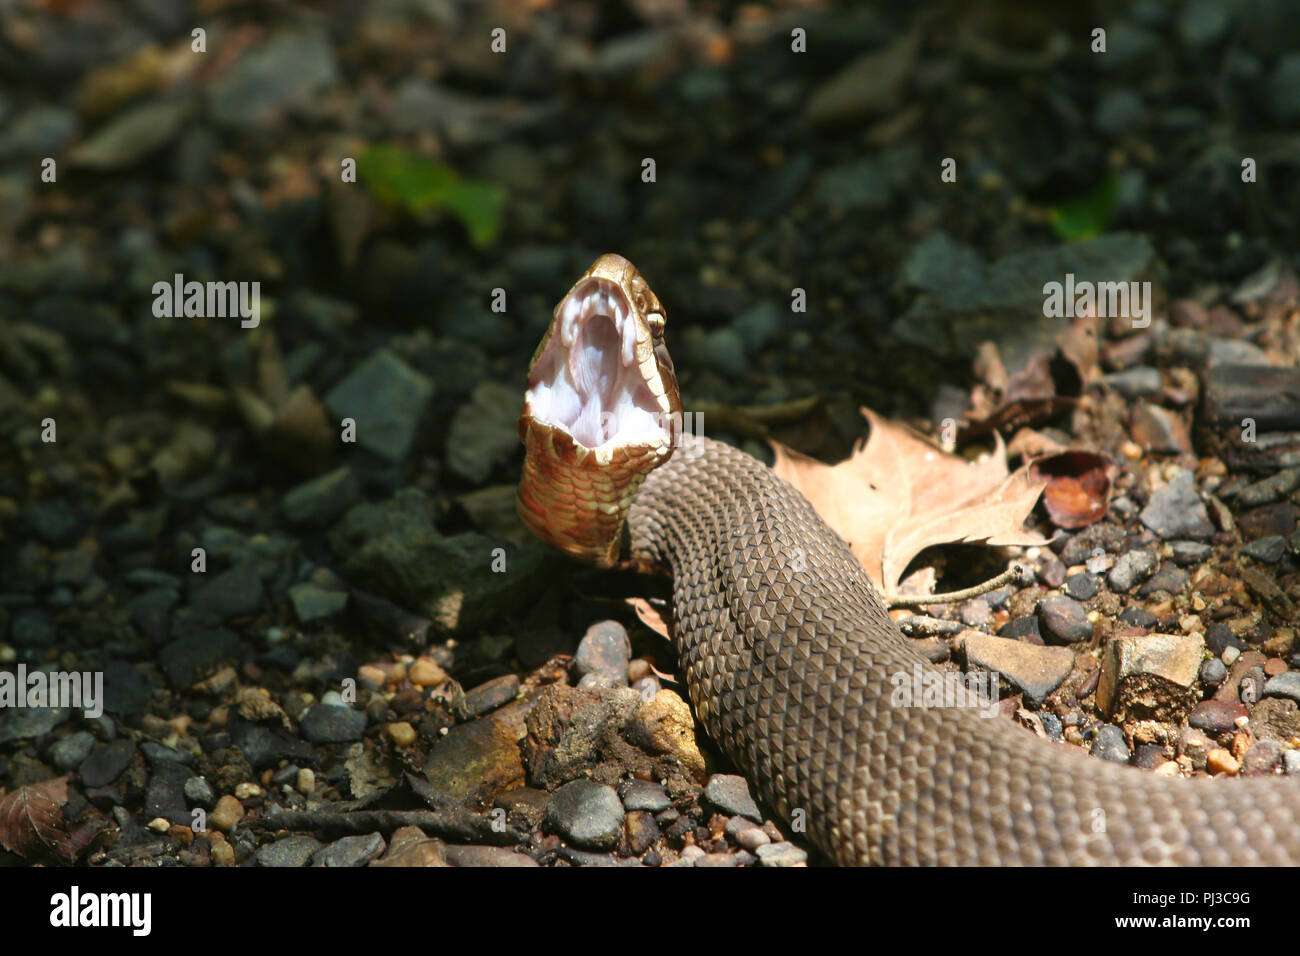 A cottonmouth displaying gaping behavior. Stock Photo